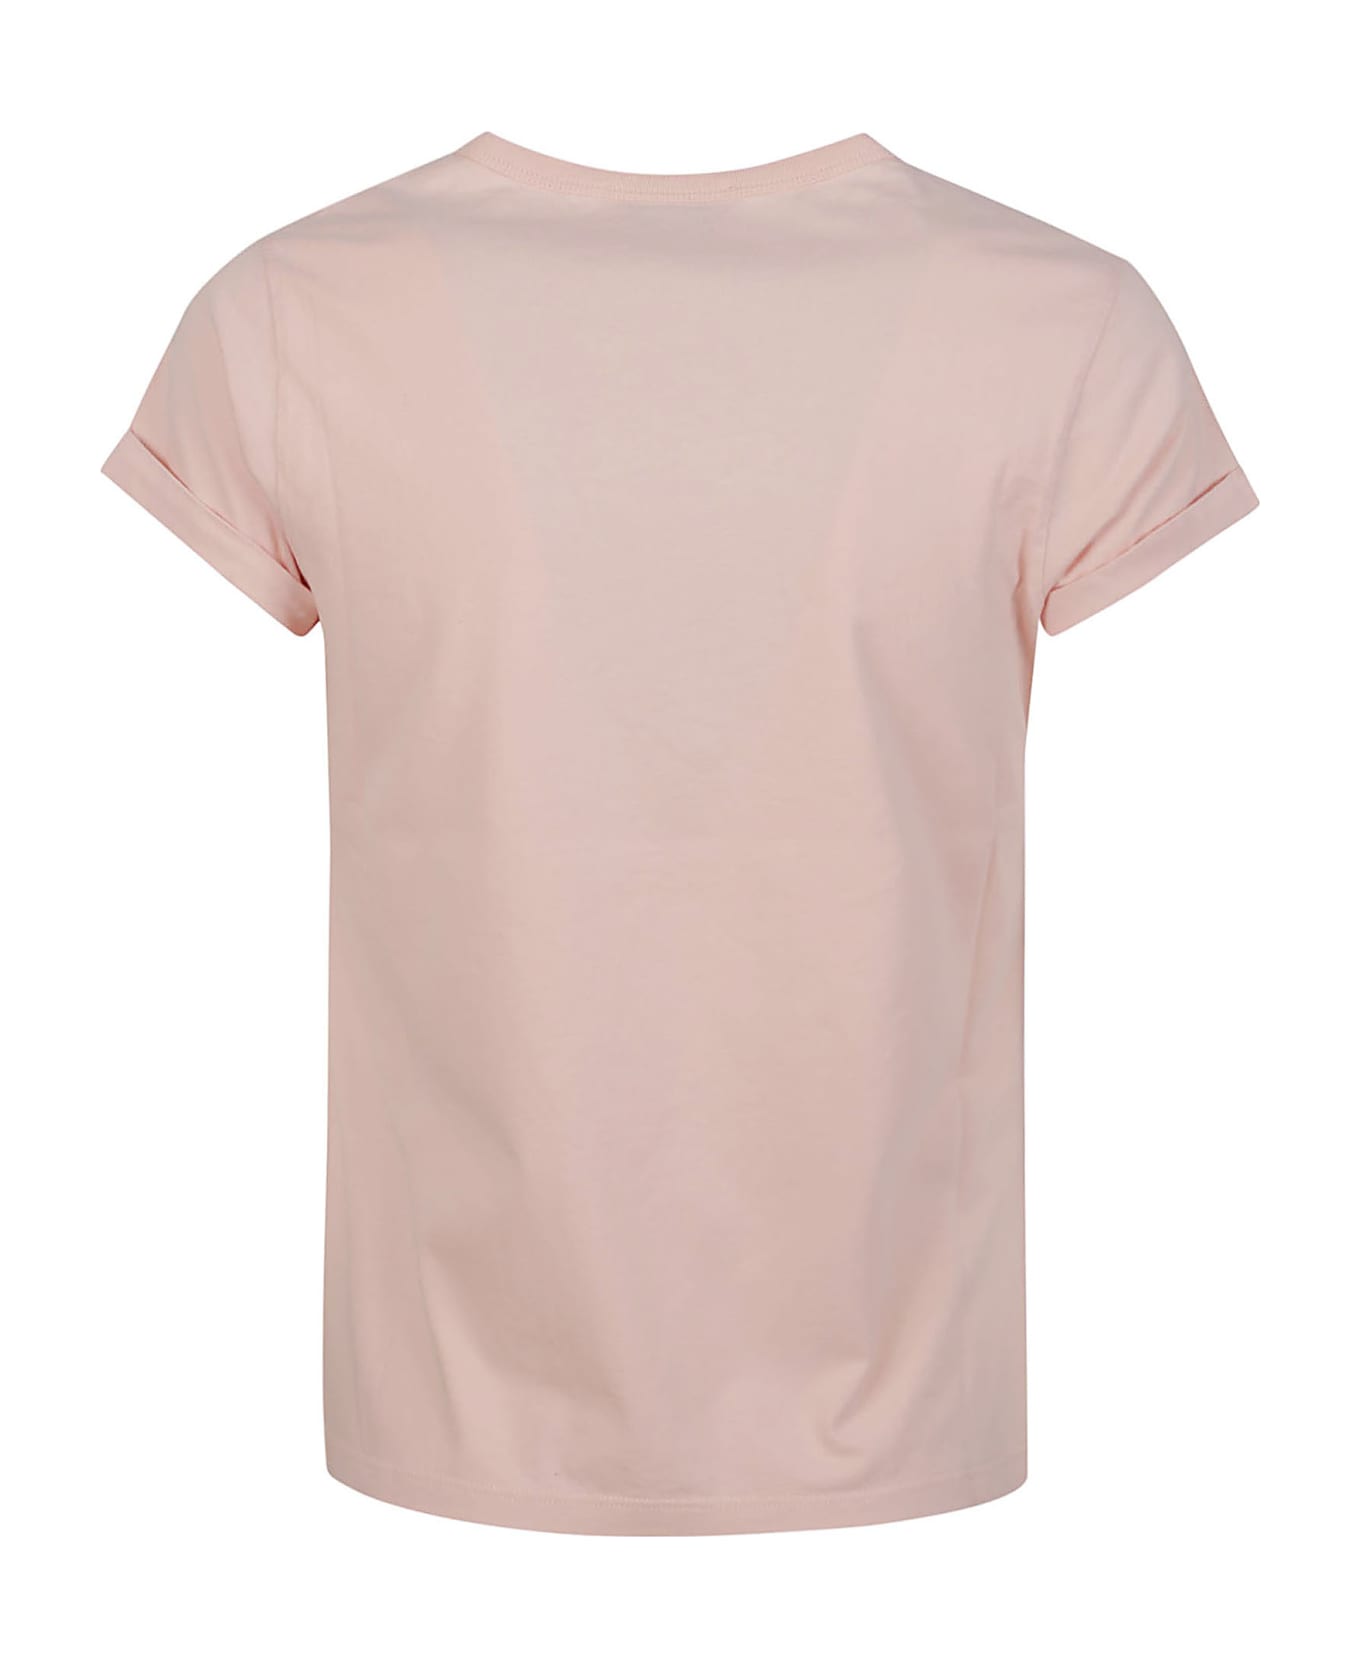 Maison Labiche T-shirts And Polos Pink - Pink